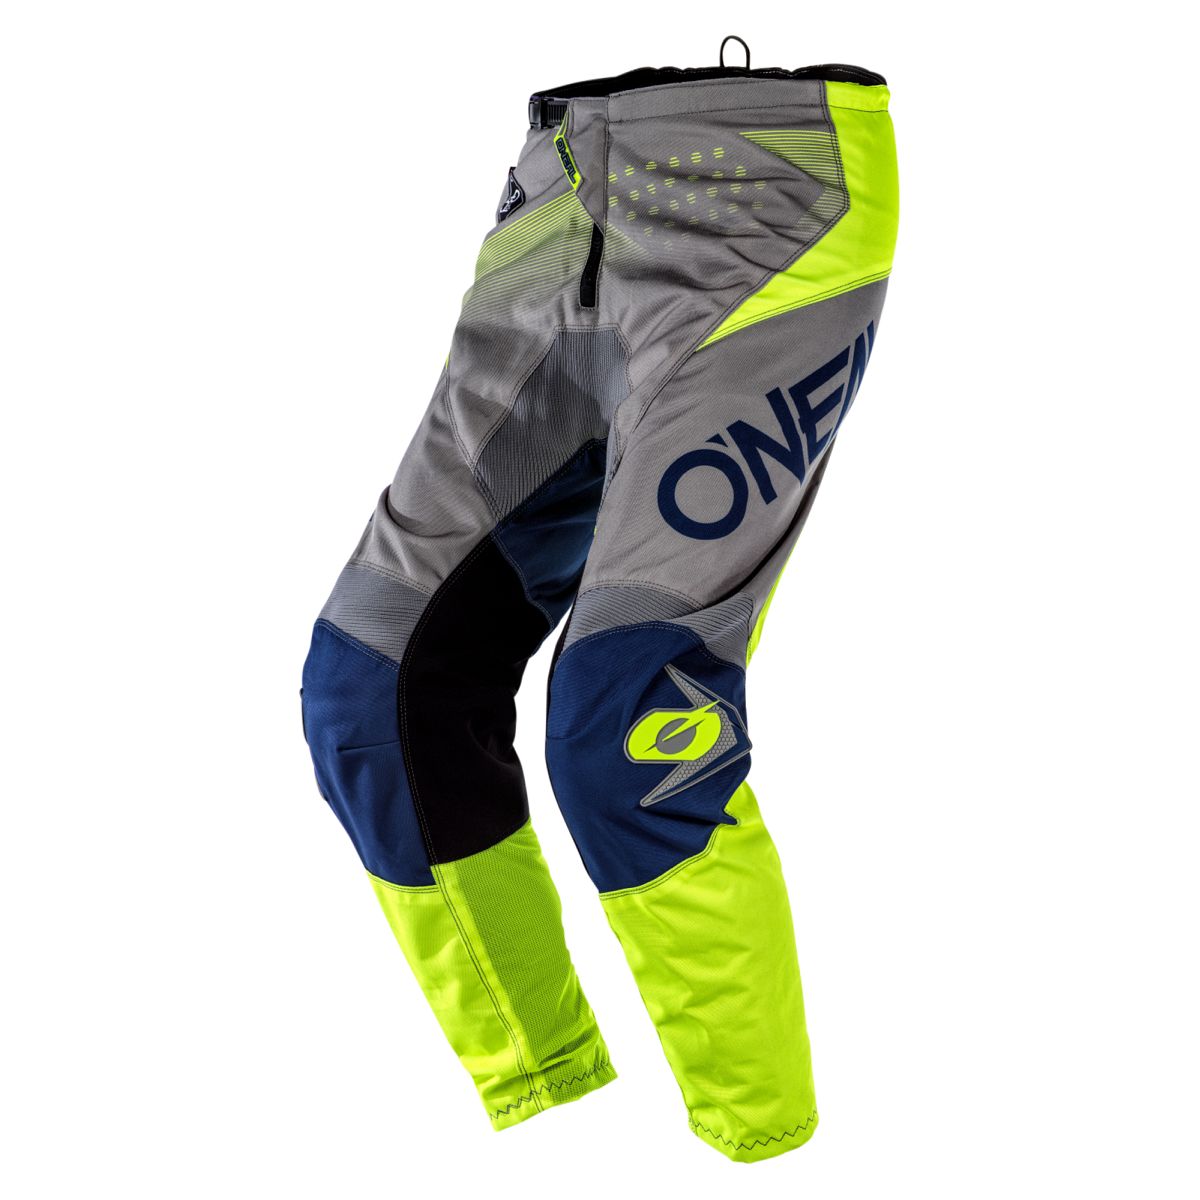 O'neal Element Factor MX DH MTB Pant Hose lang grau/blau/gelb 2020 Oneal